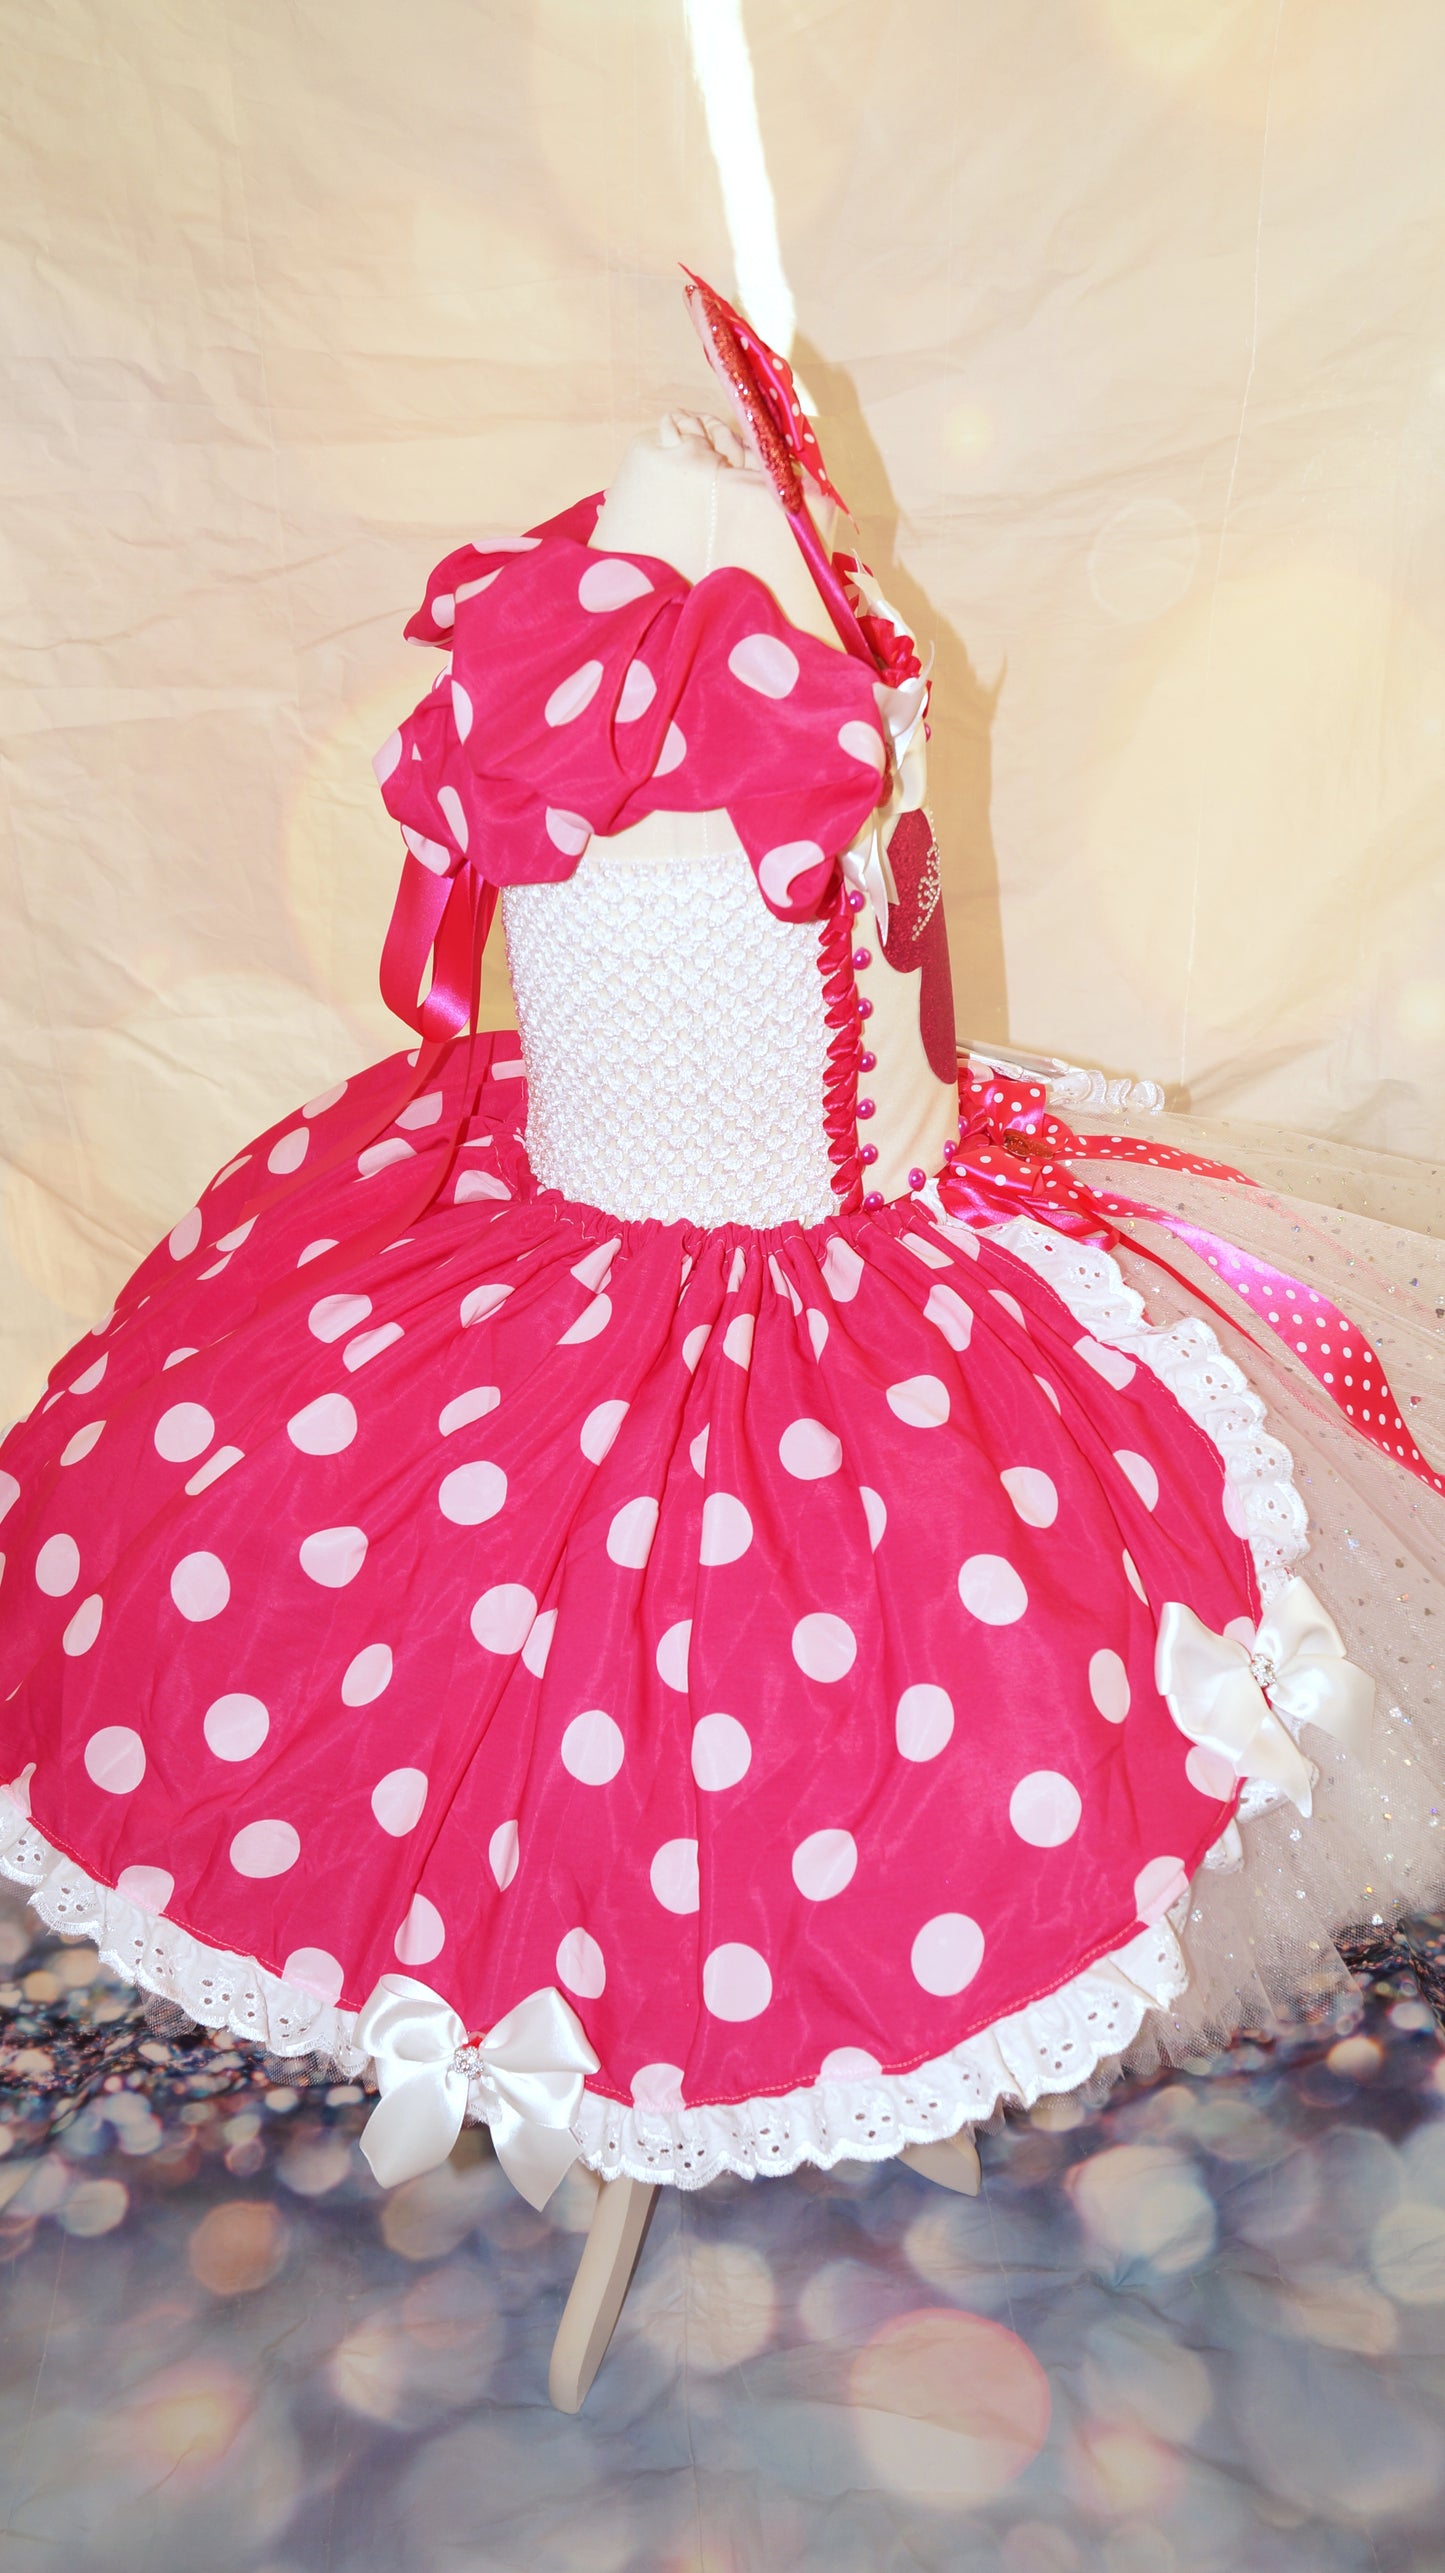 Disney Pink and White Polka Dot Minnie Mouse Inspired Tutu Dress